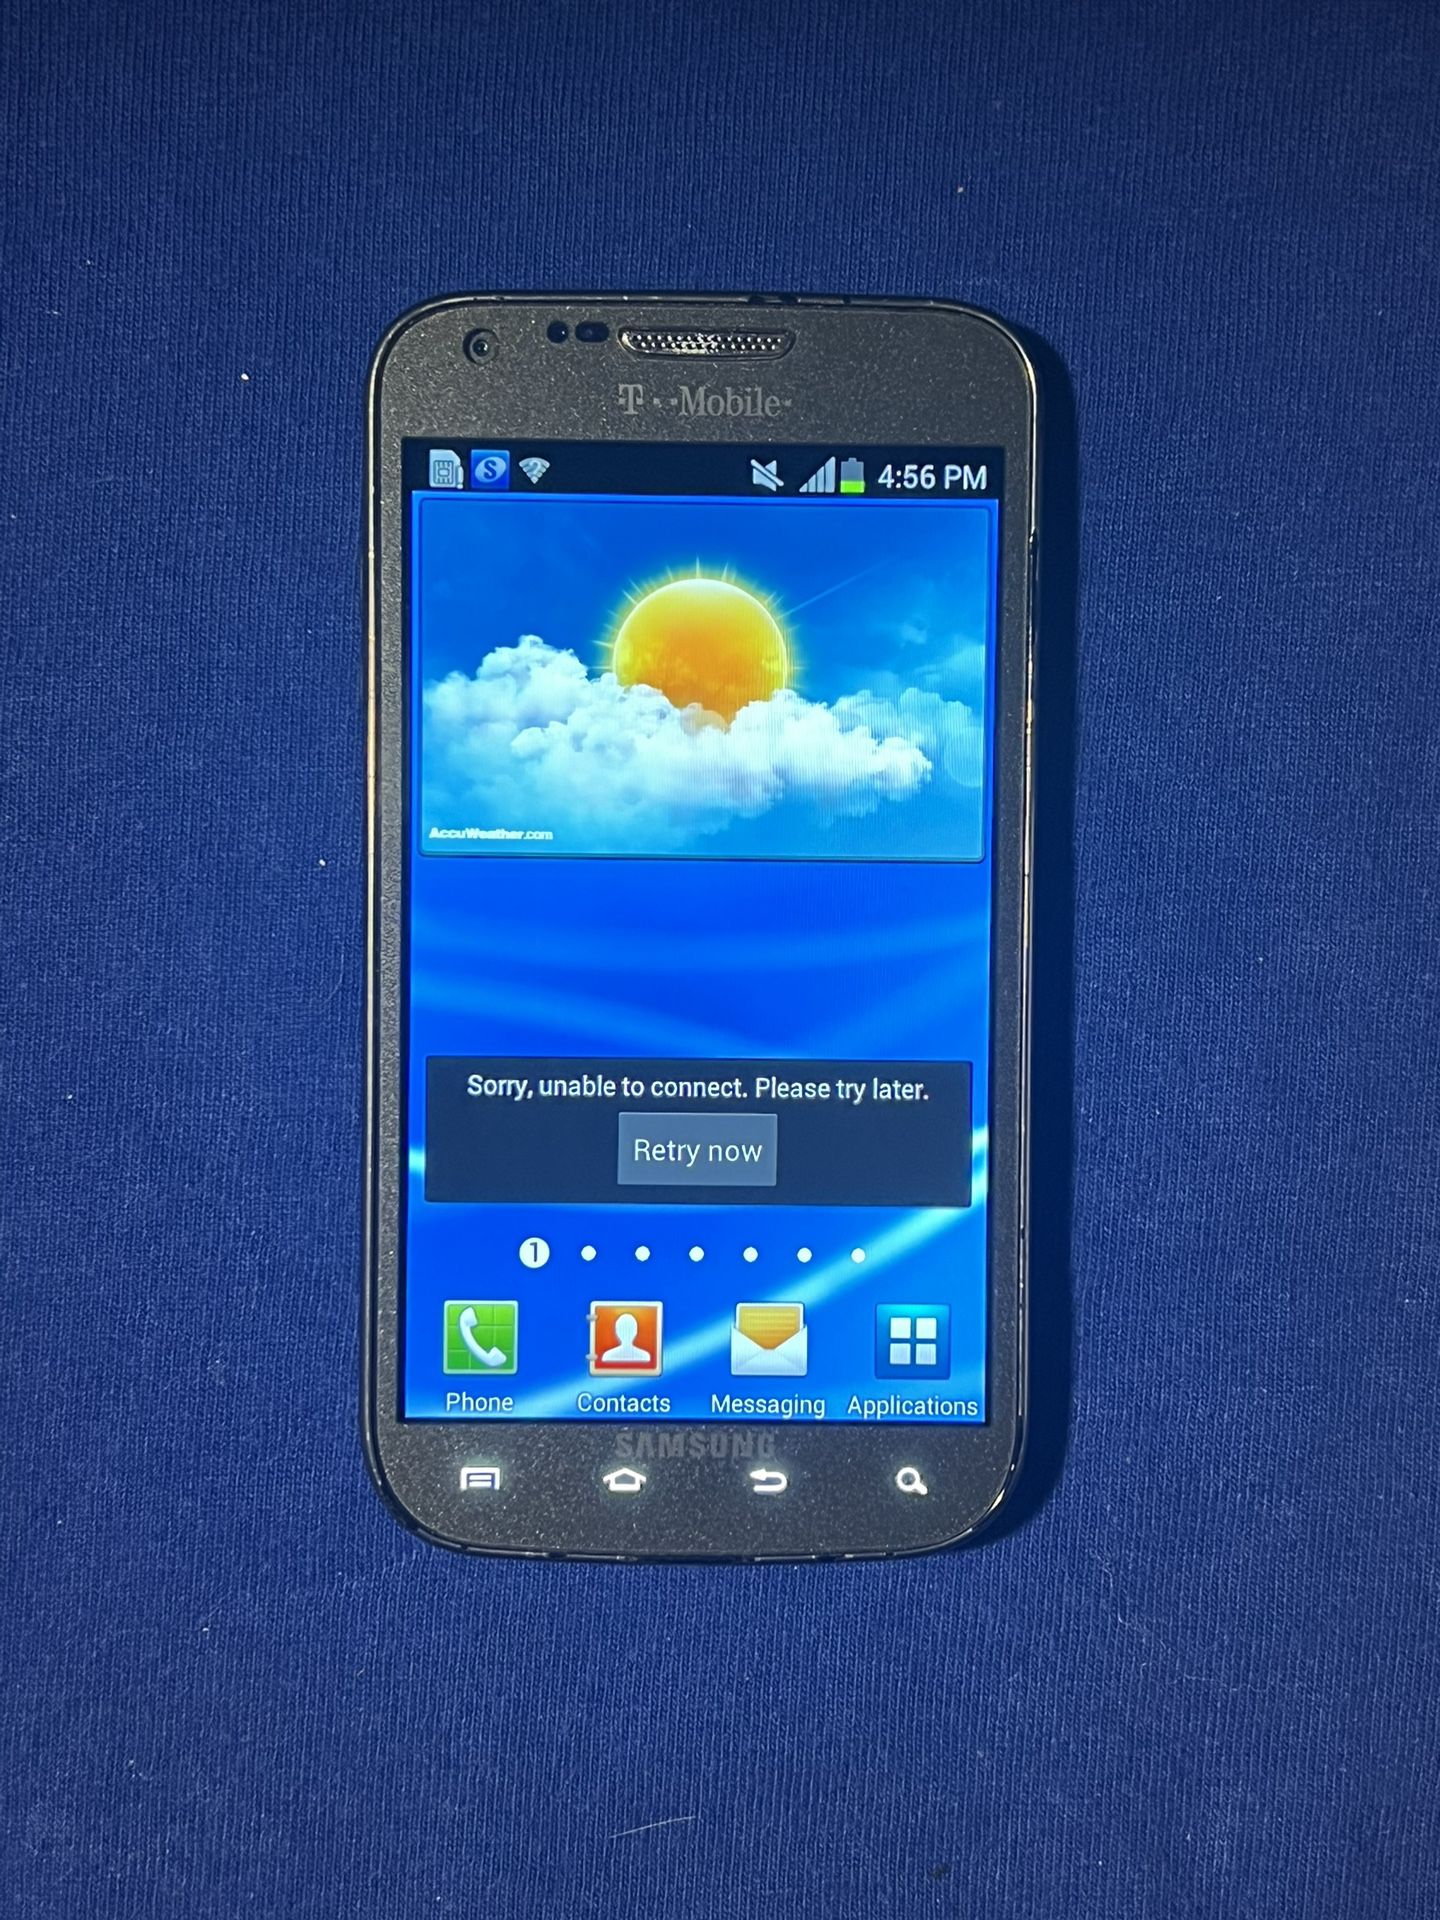 Samsung Galaxy S2 (T-mobile) 